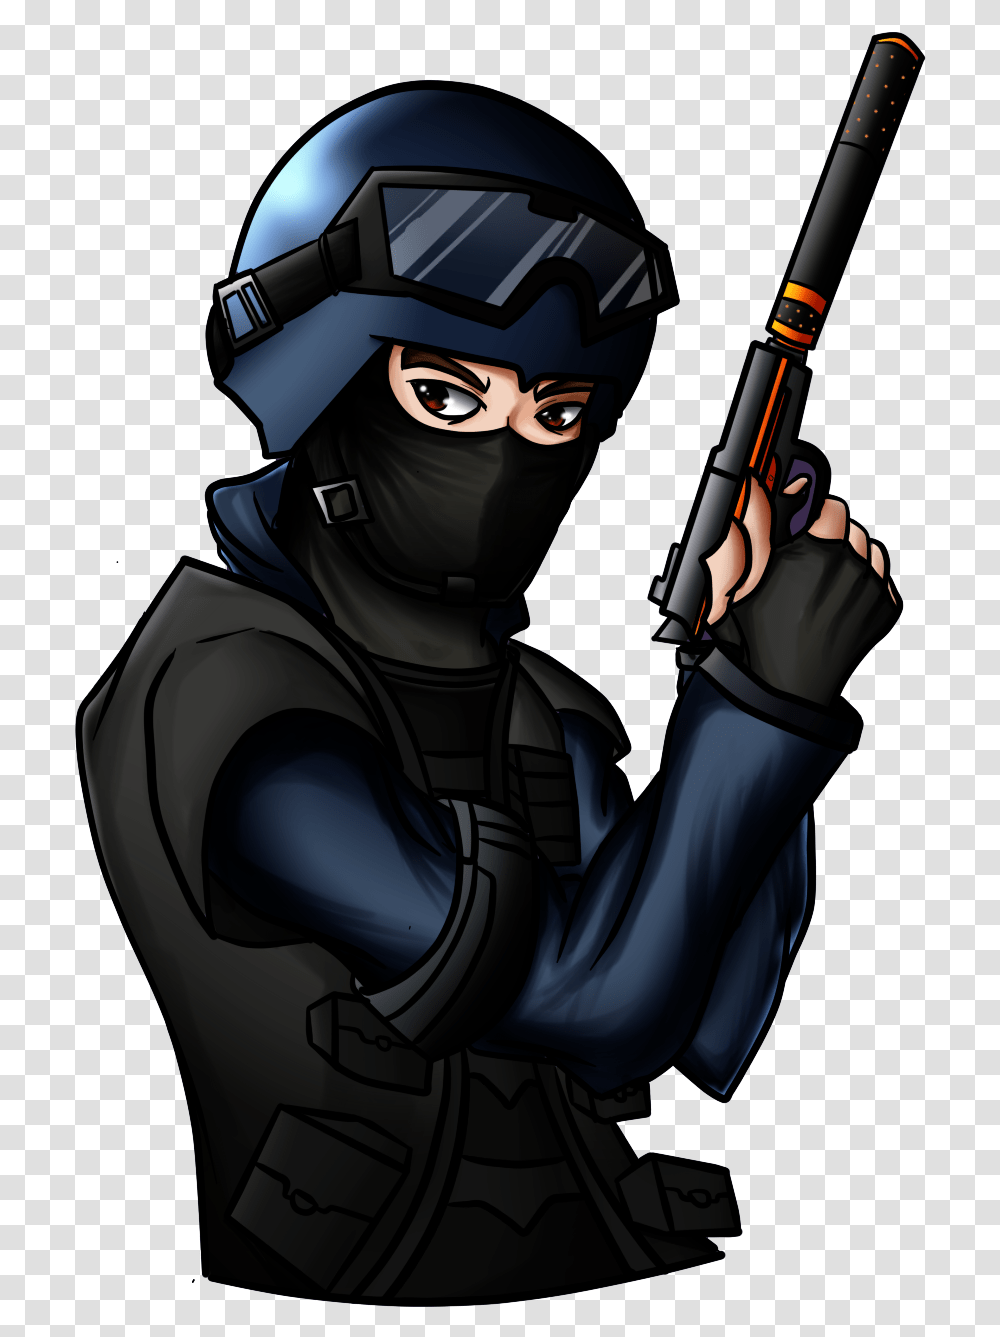 Csgo Guy Csgo Counter Terrorist, Ninja, Helmet, Apparel Transparent Png